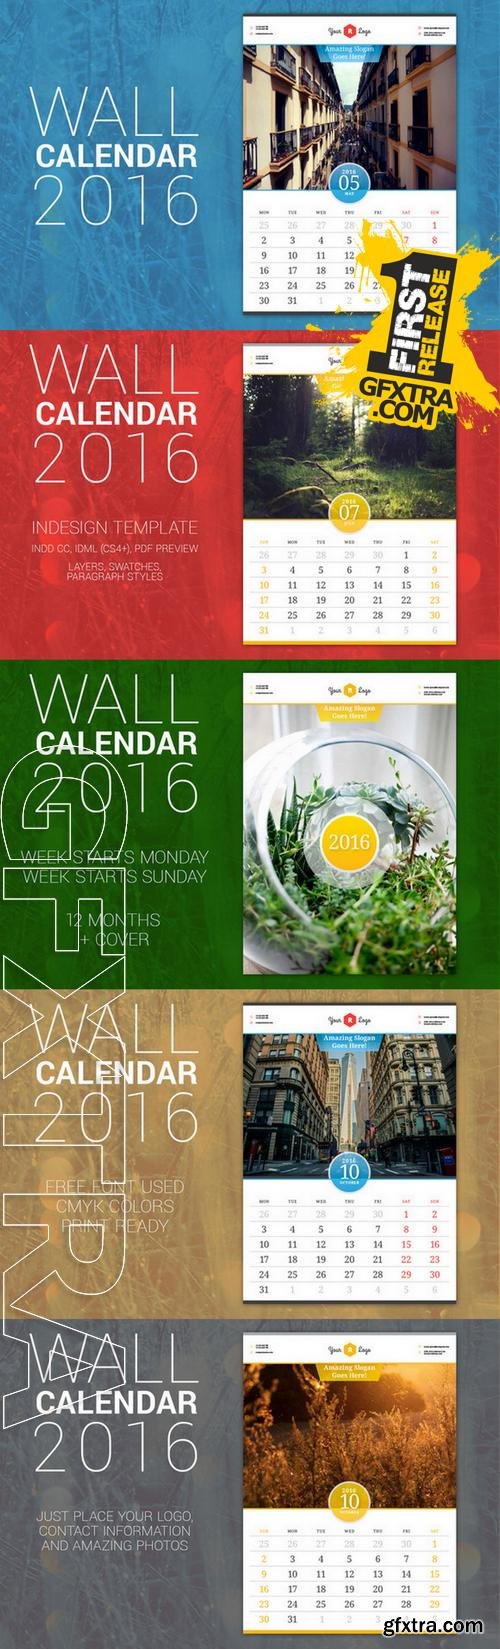 Wall Calendar 2016 - CM 311558